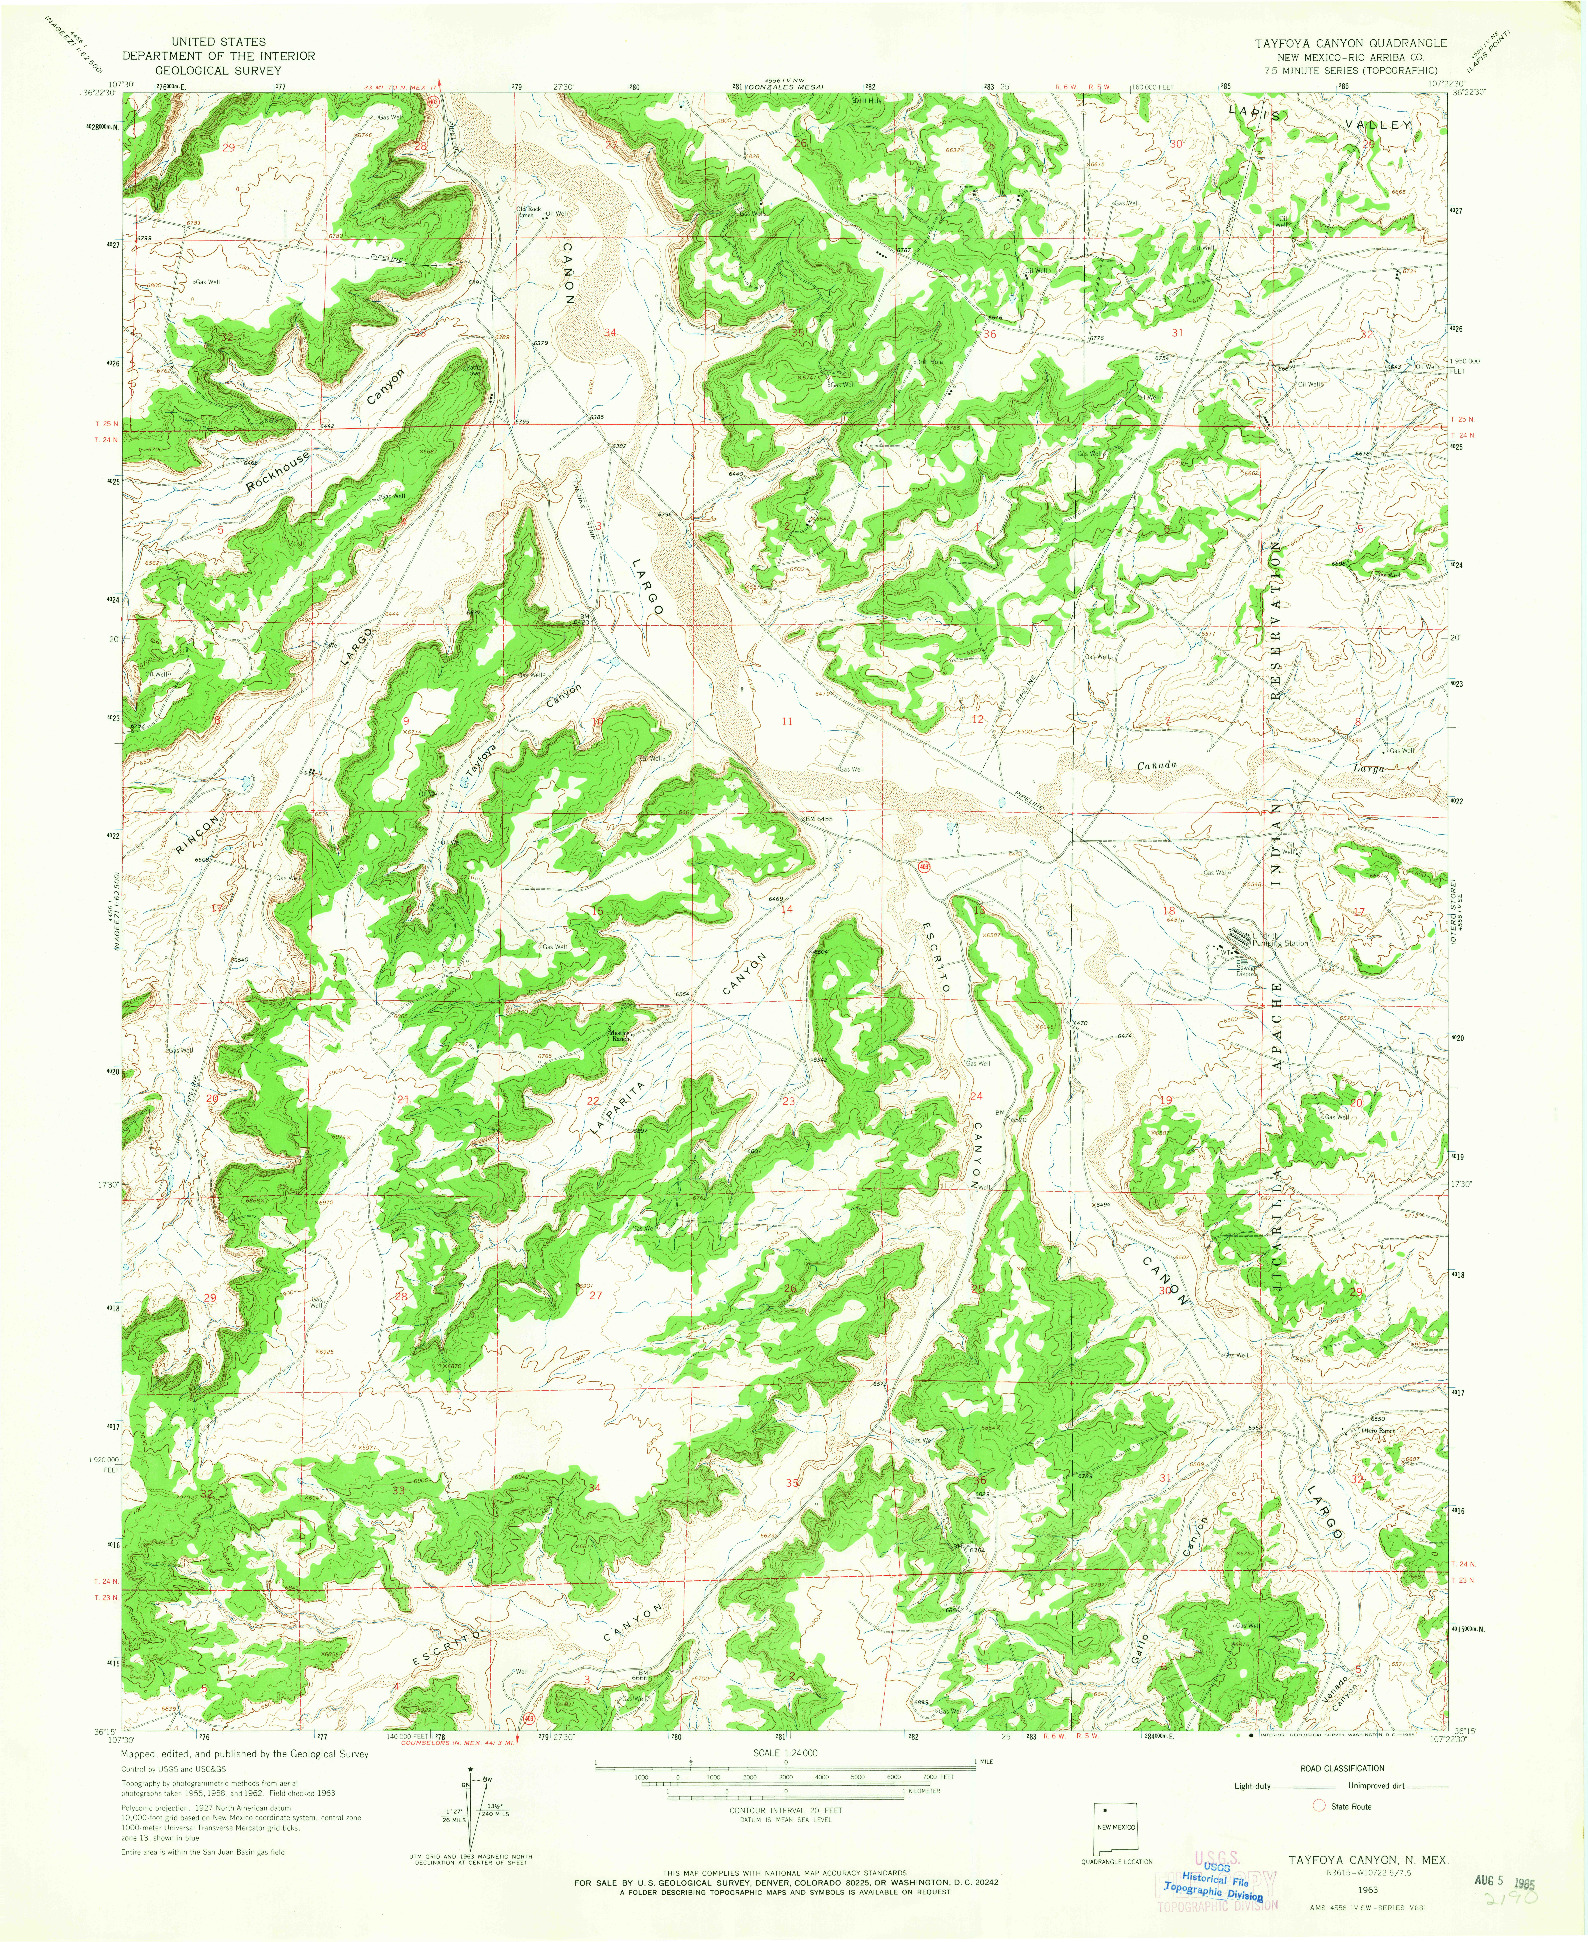 USGS 1:24000-SCALE QUADRANGLE FOR TAYFOYA CANYON, NM 1963